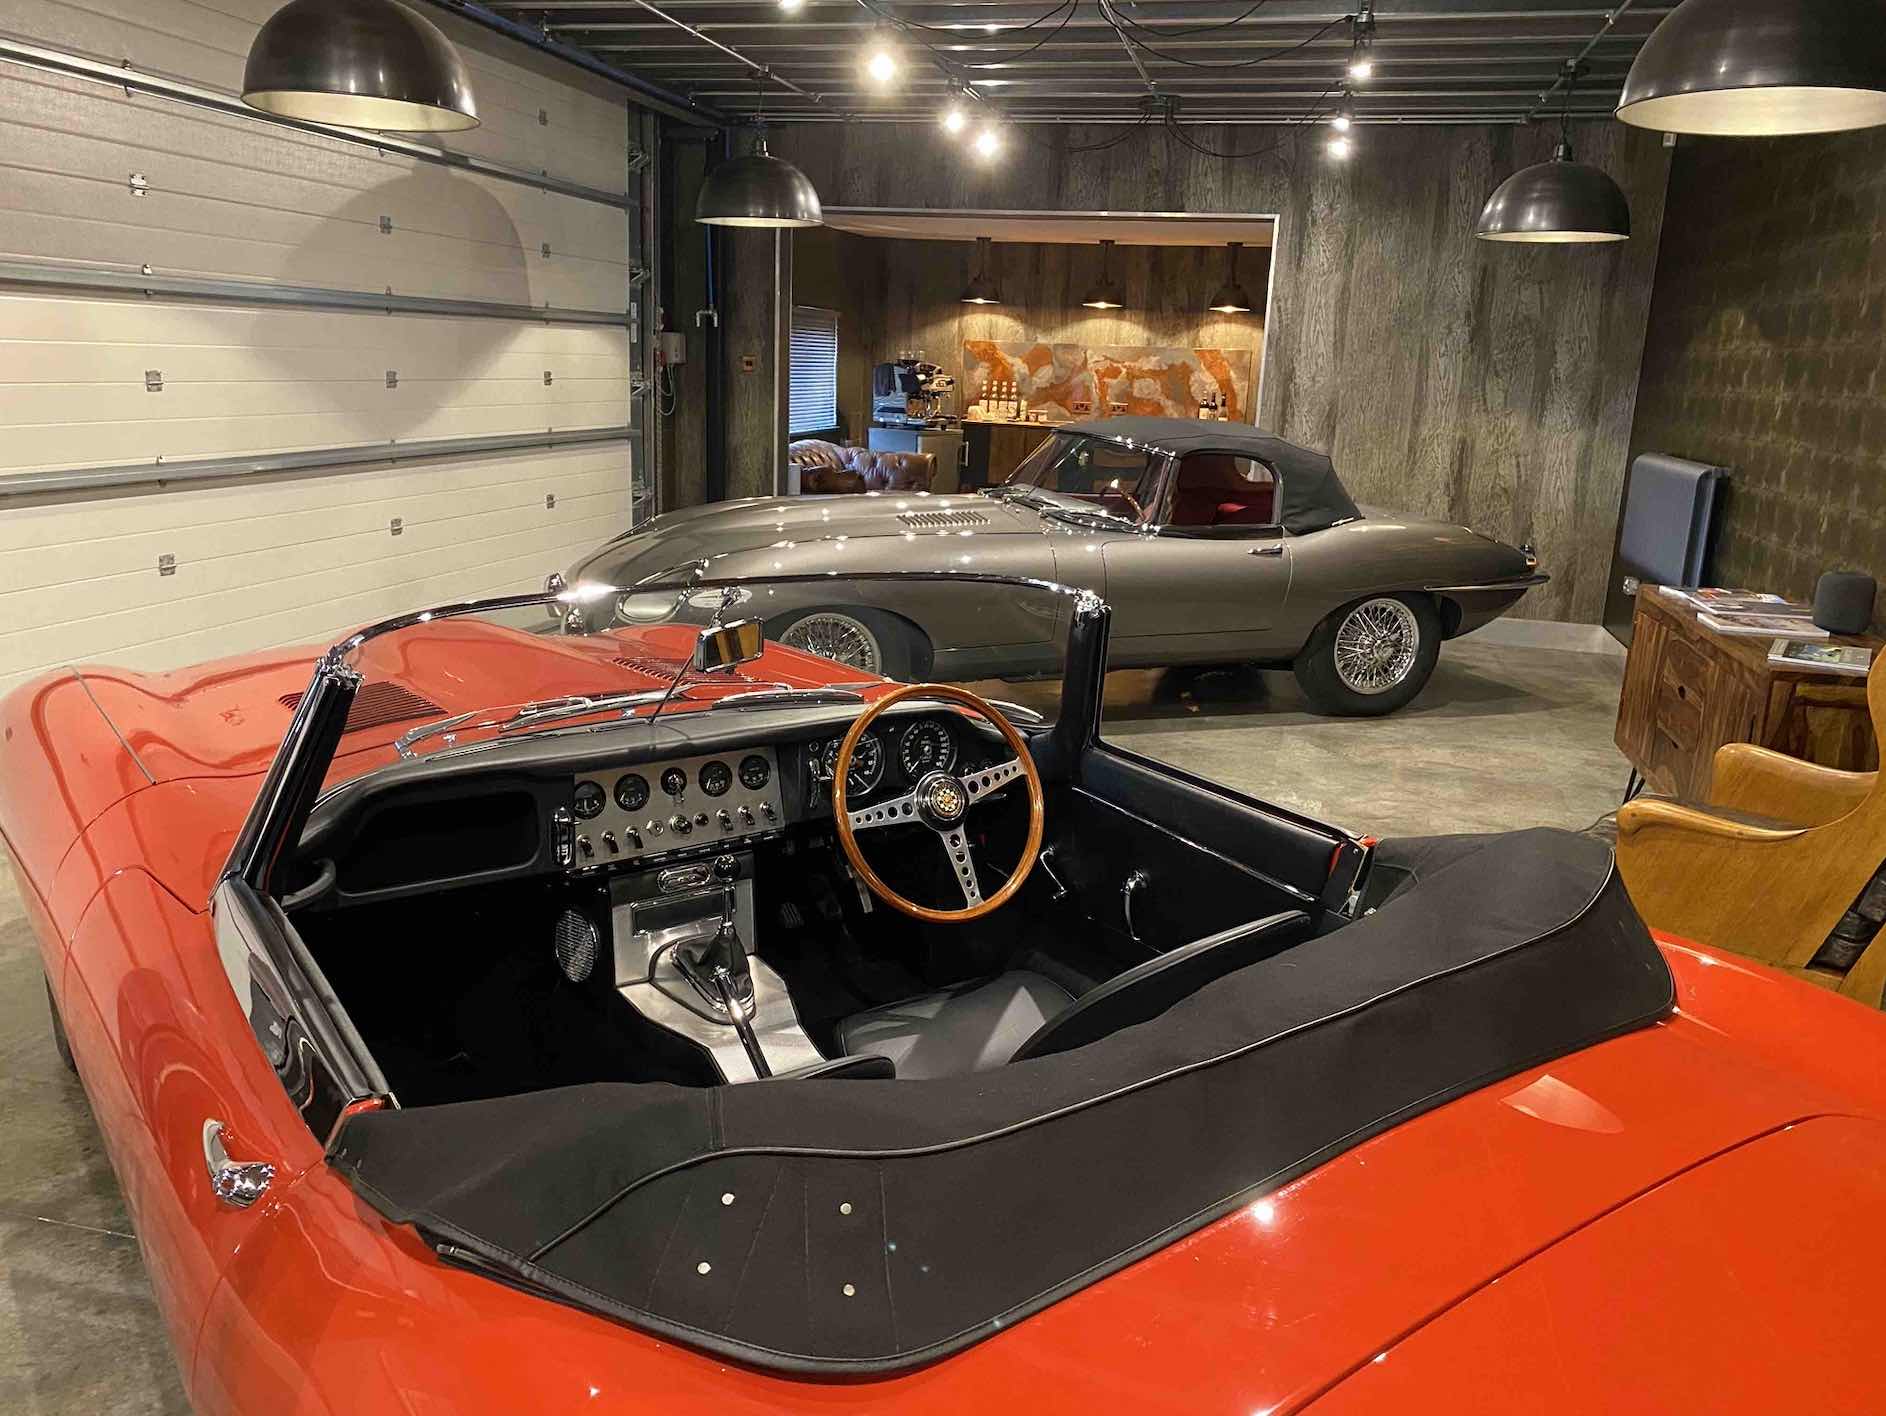 E-type uk Jaguar E-Type showing restored interior of car